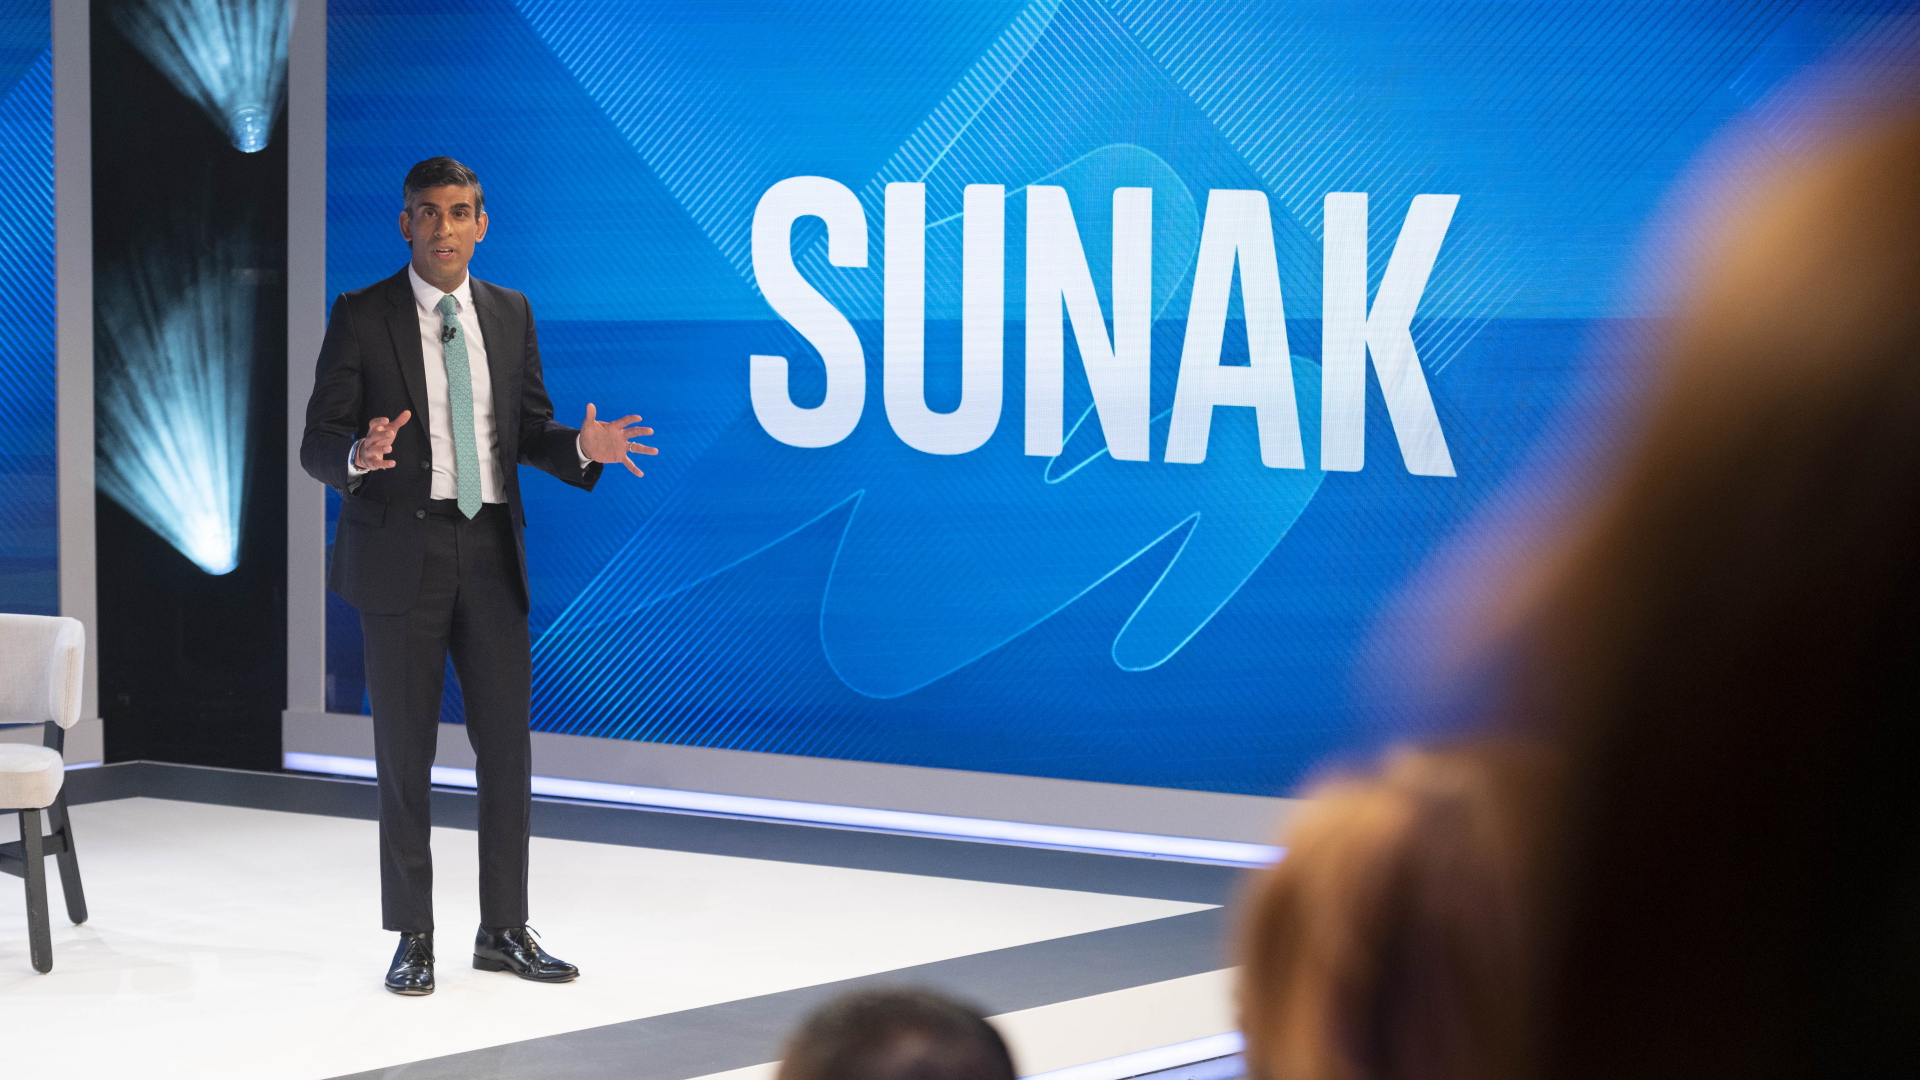 Johnson’s successor: Sunak convinces viewers in TV duel